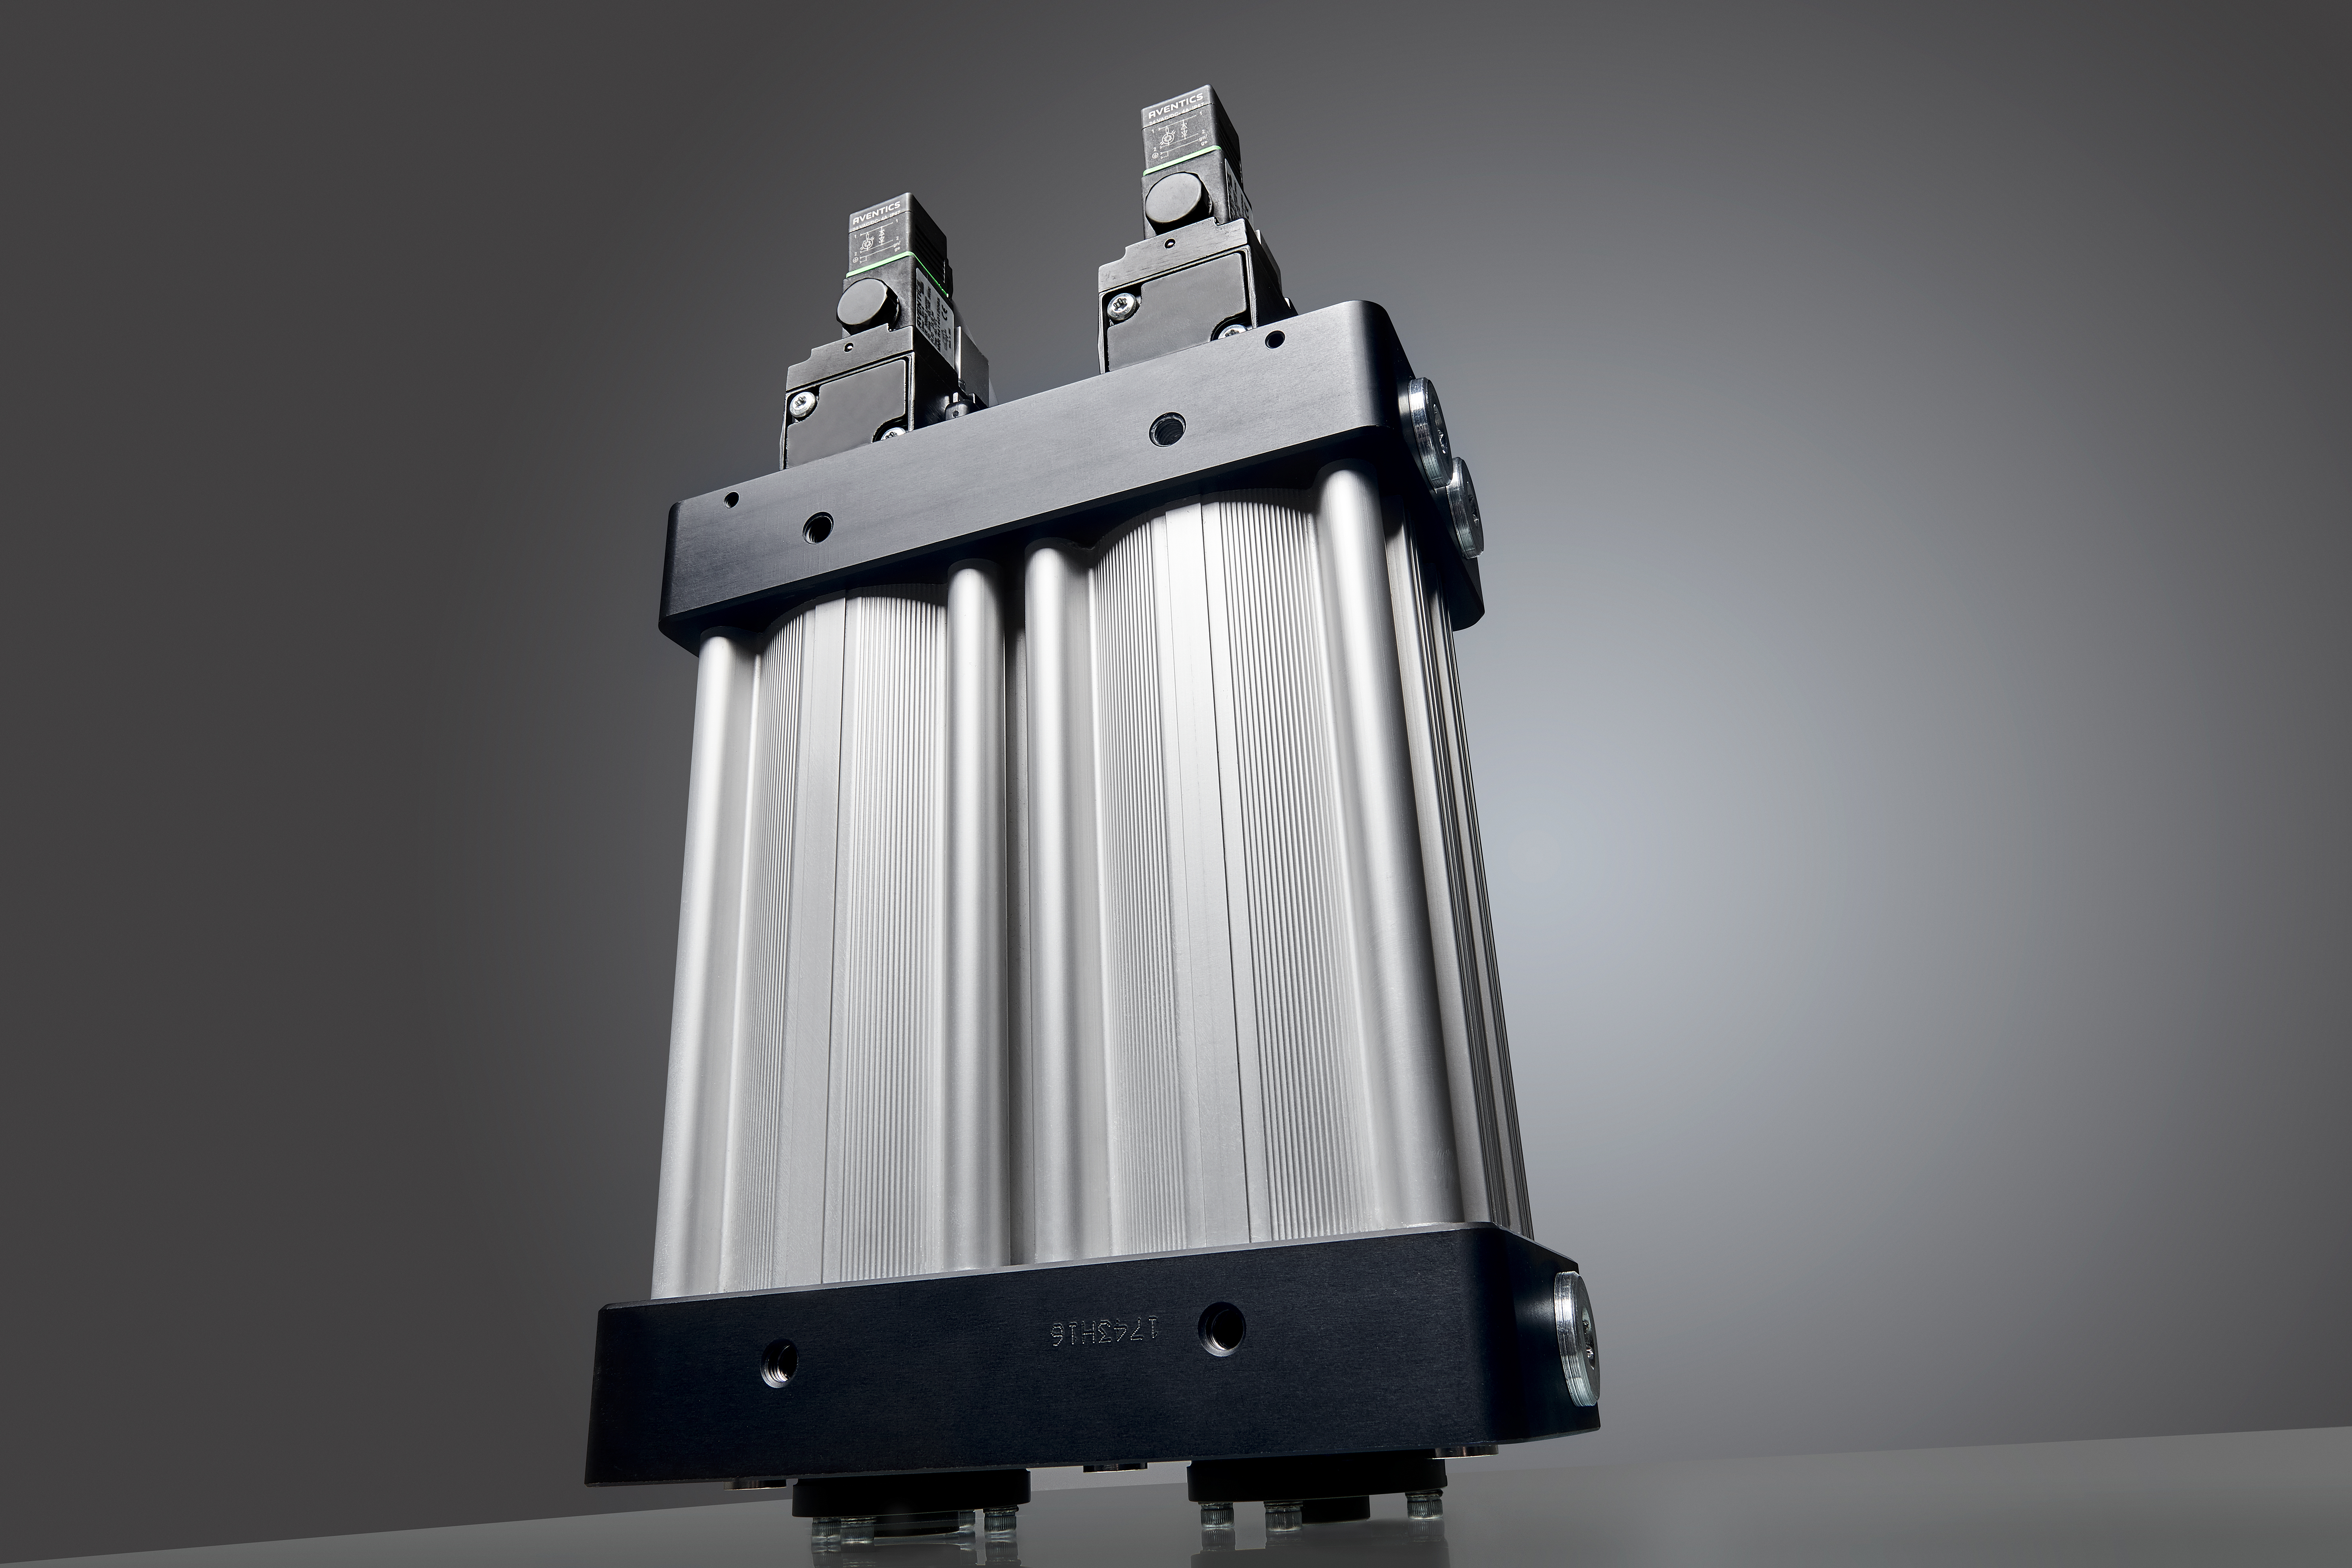 Emerson’s New Air Dryers Quadruple Maintenance Intervals in Rail Applications